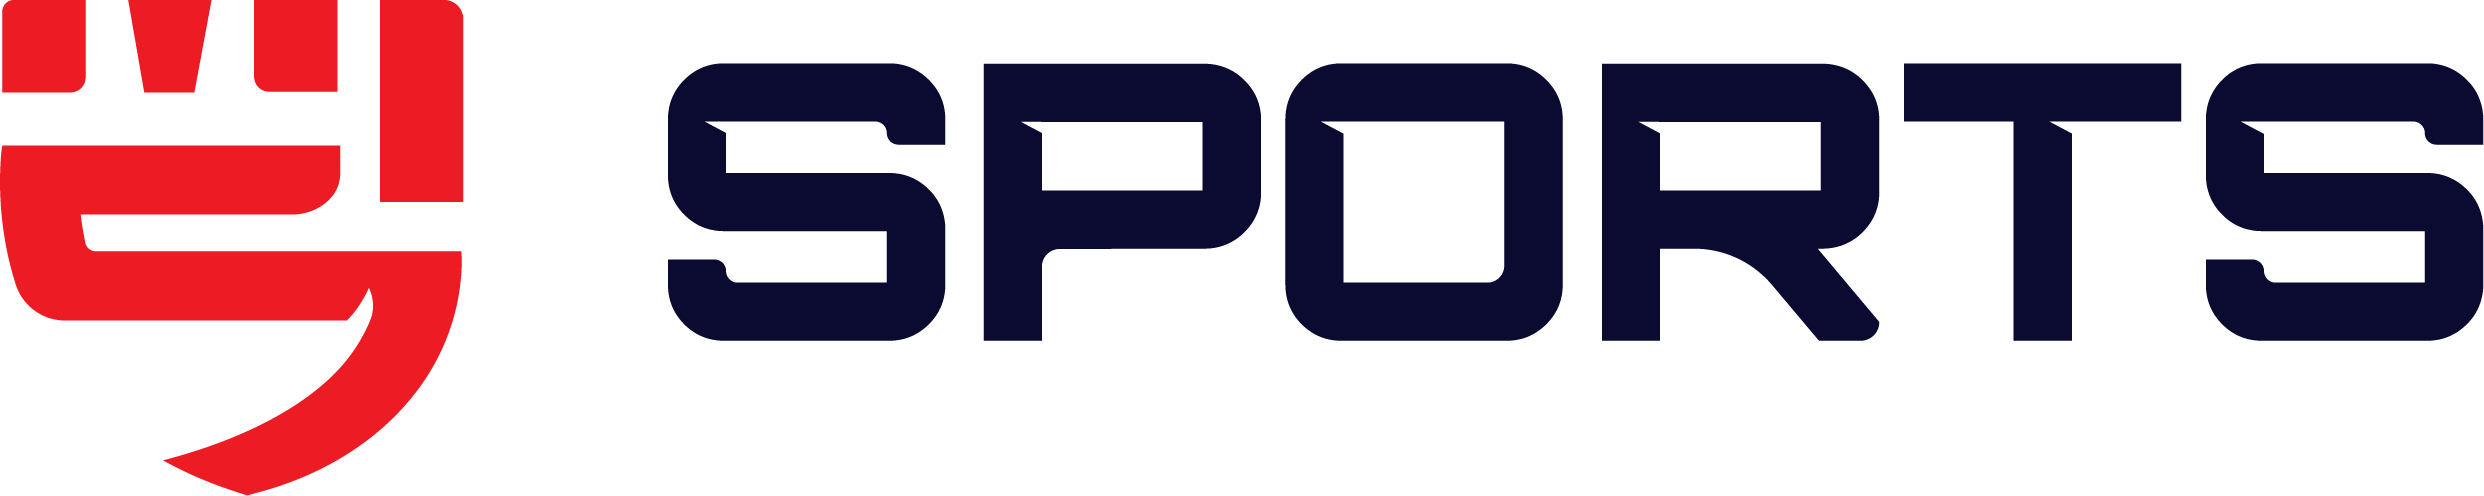 MSports logo